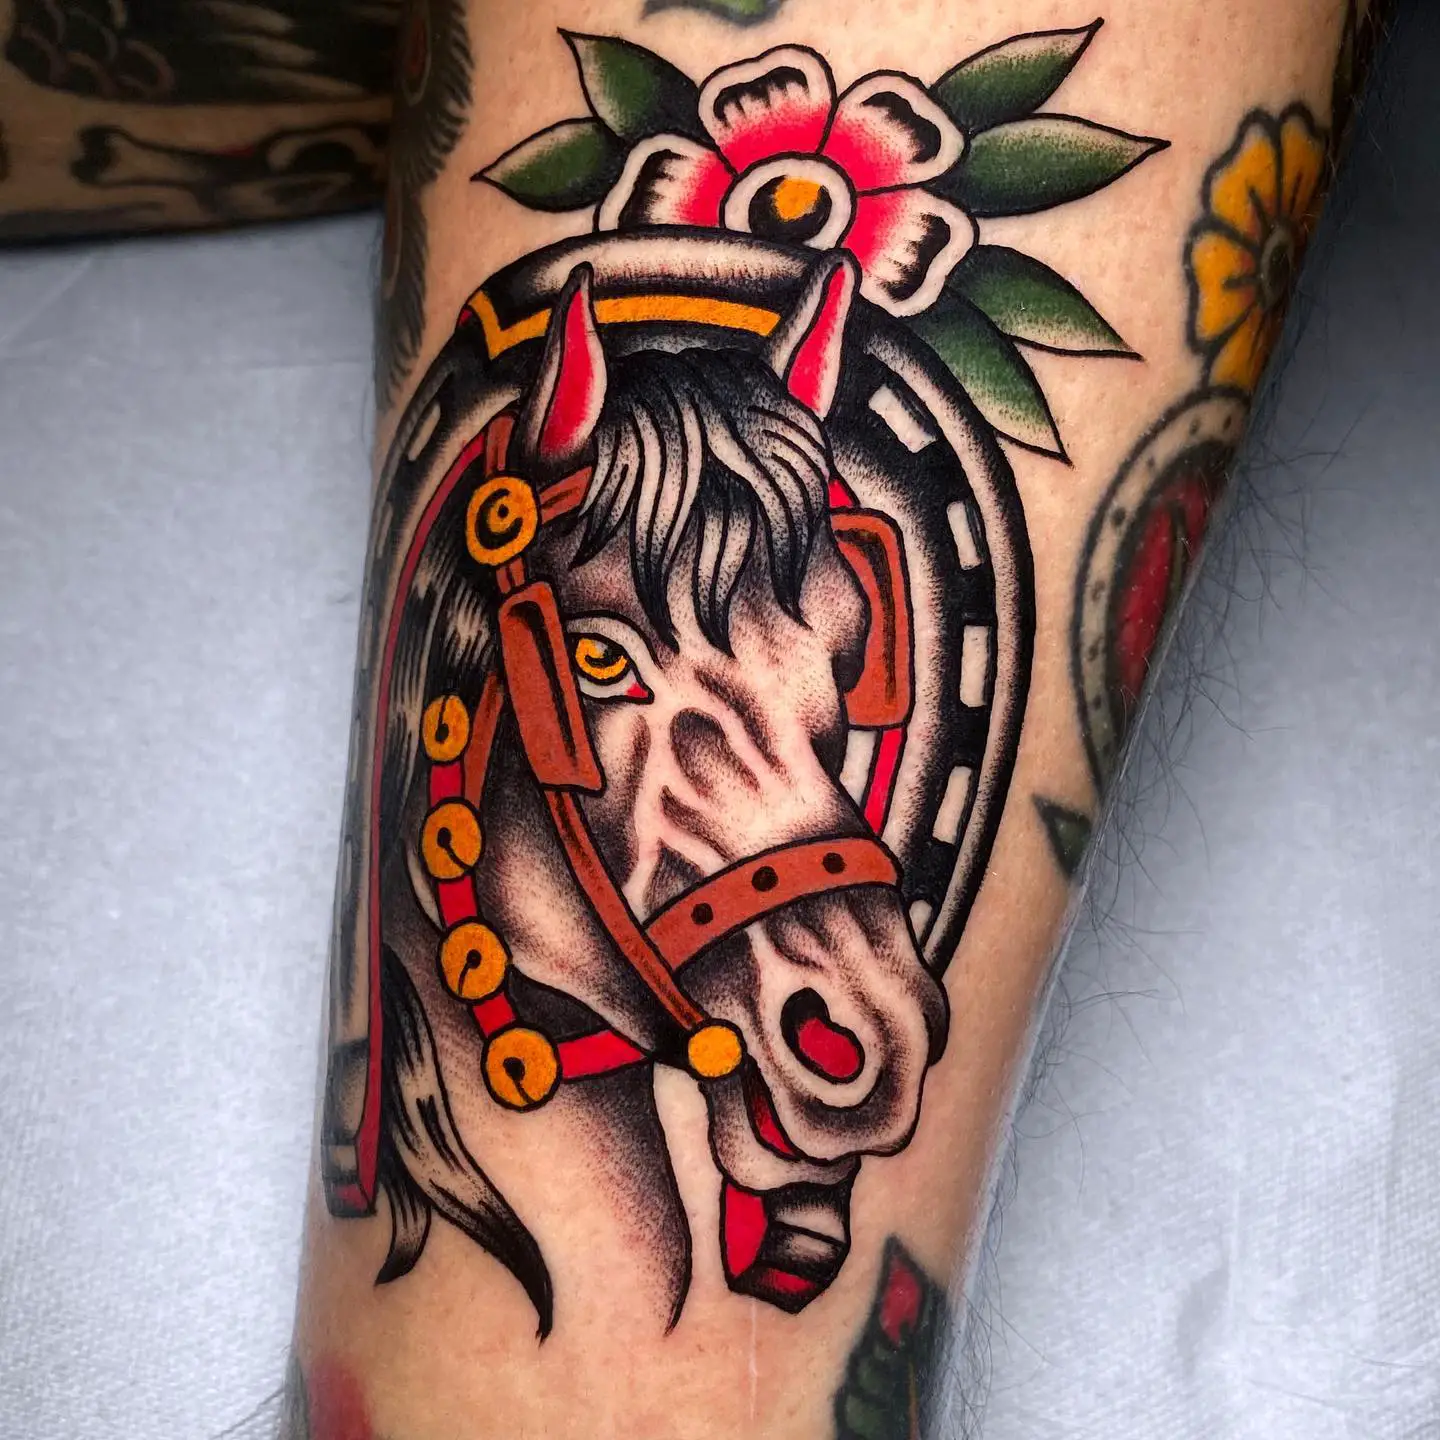 Horse flower tattoo by team fullgas